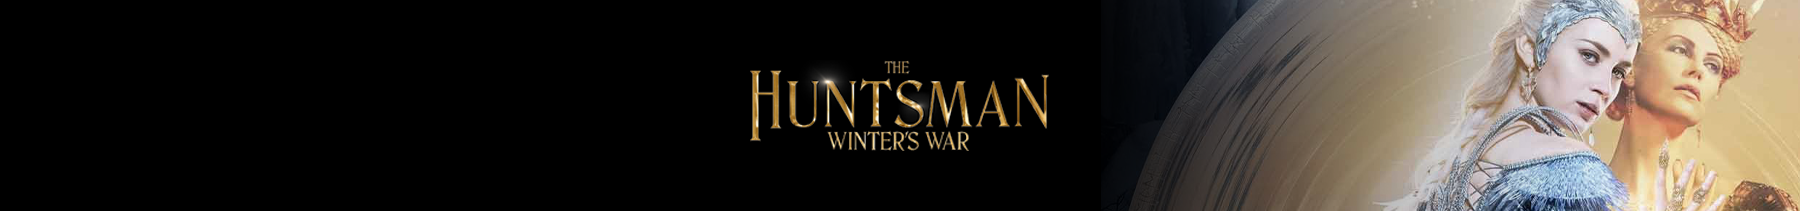 huntsman winters war